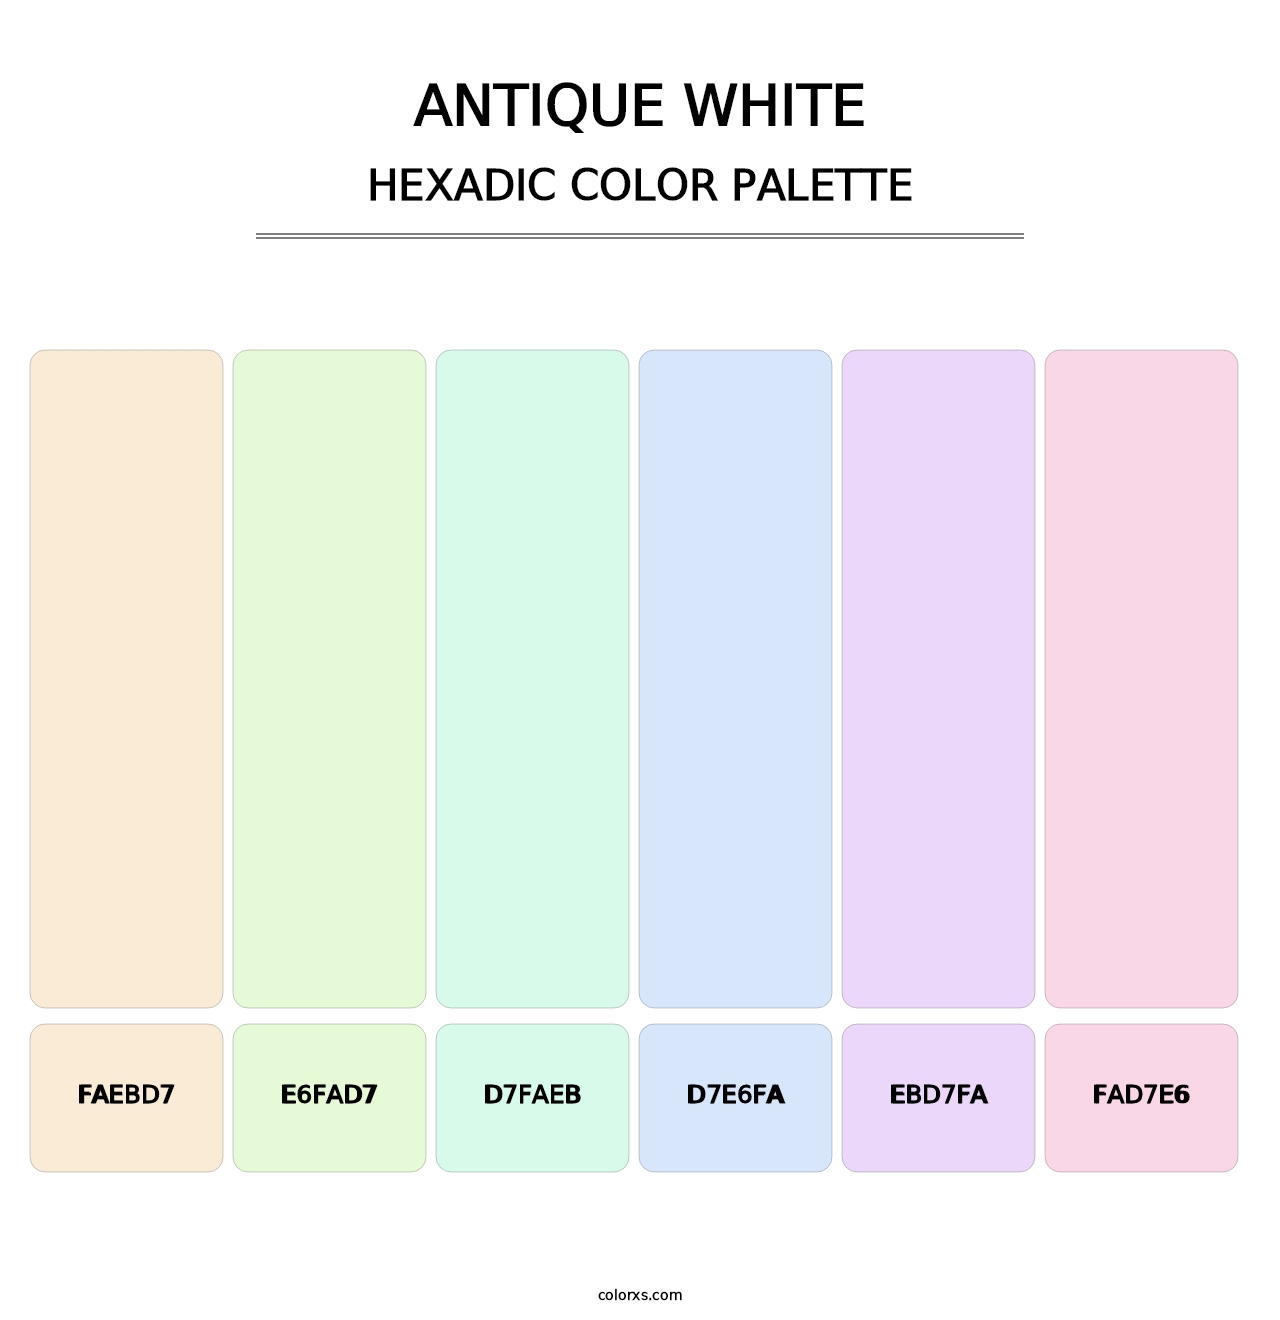 Antique White - Hexadic Color Palette